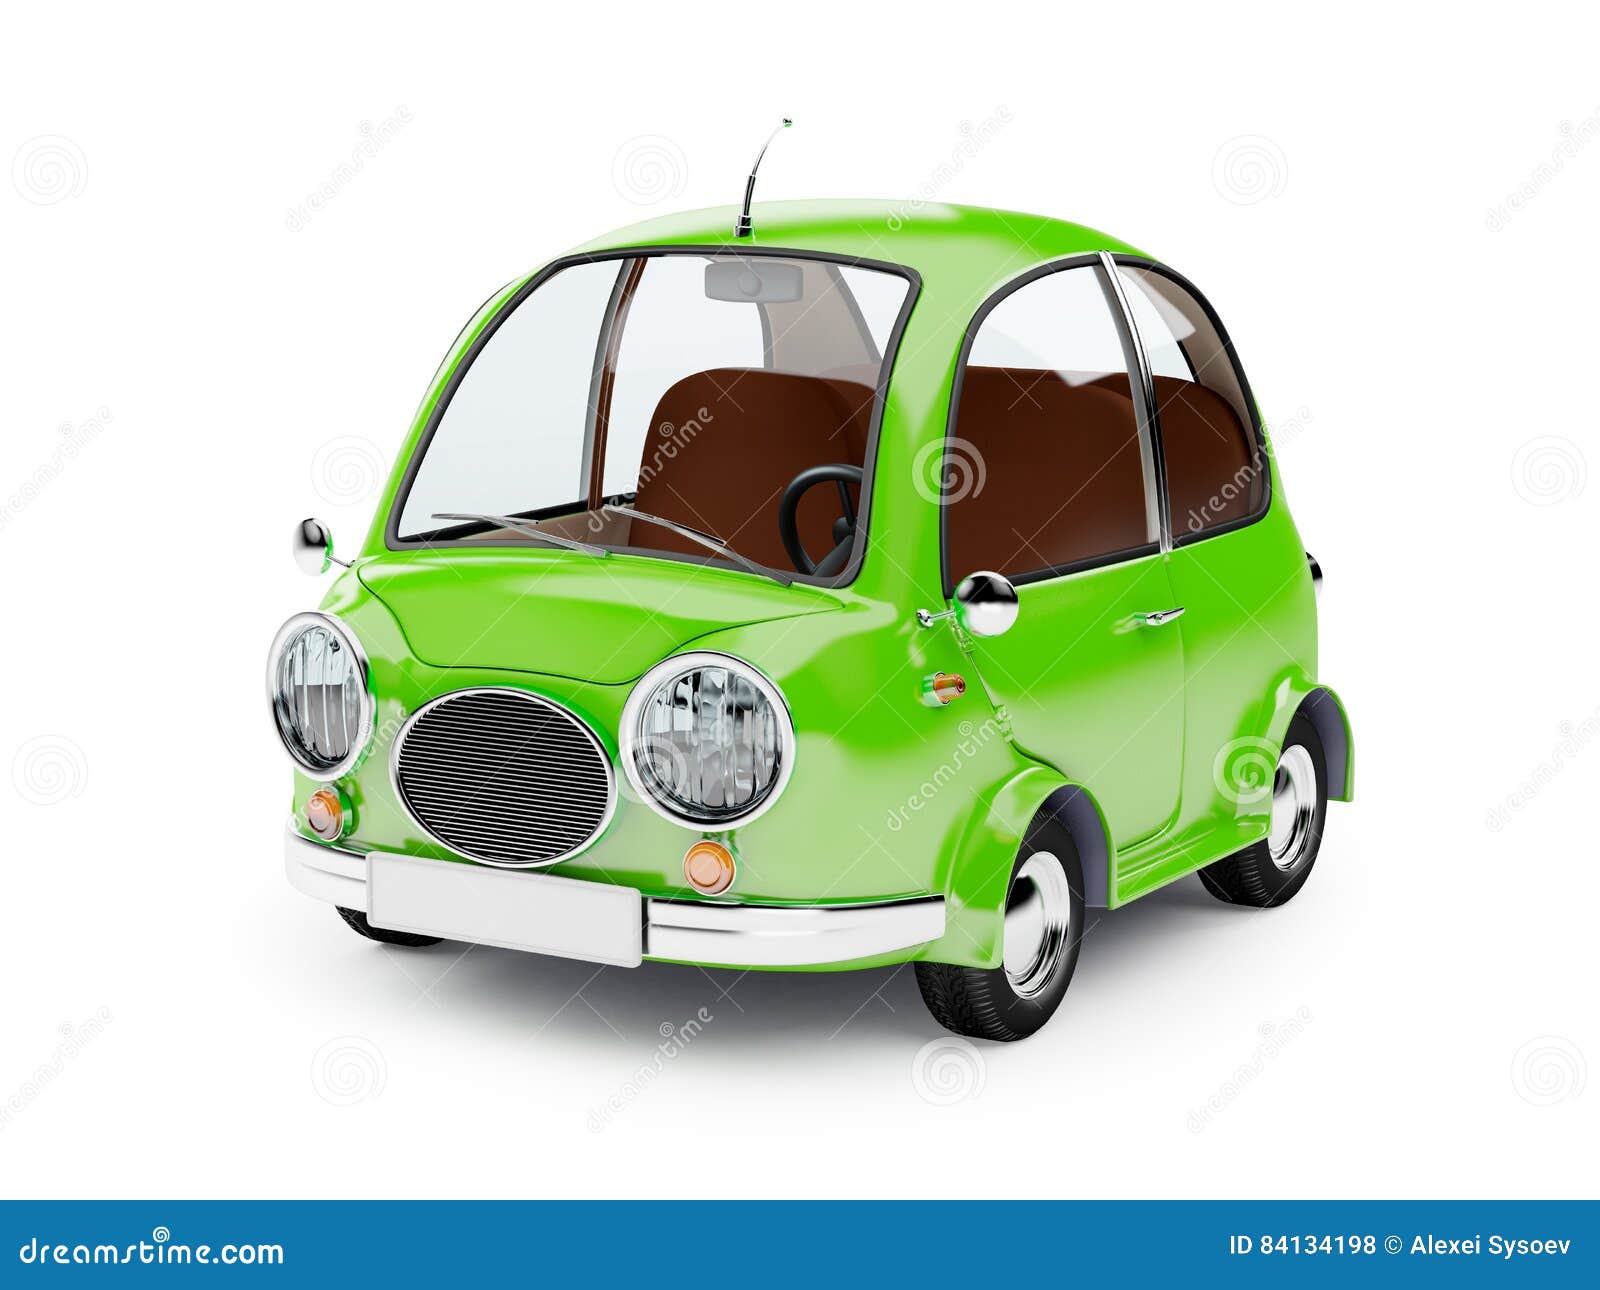 Pijl kofferbak Toegeven Ronde kleine groene auto stock illustratie. Illustration of vervoer -  84134198